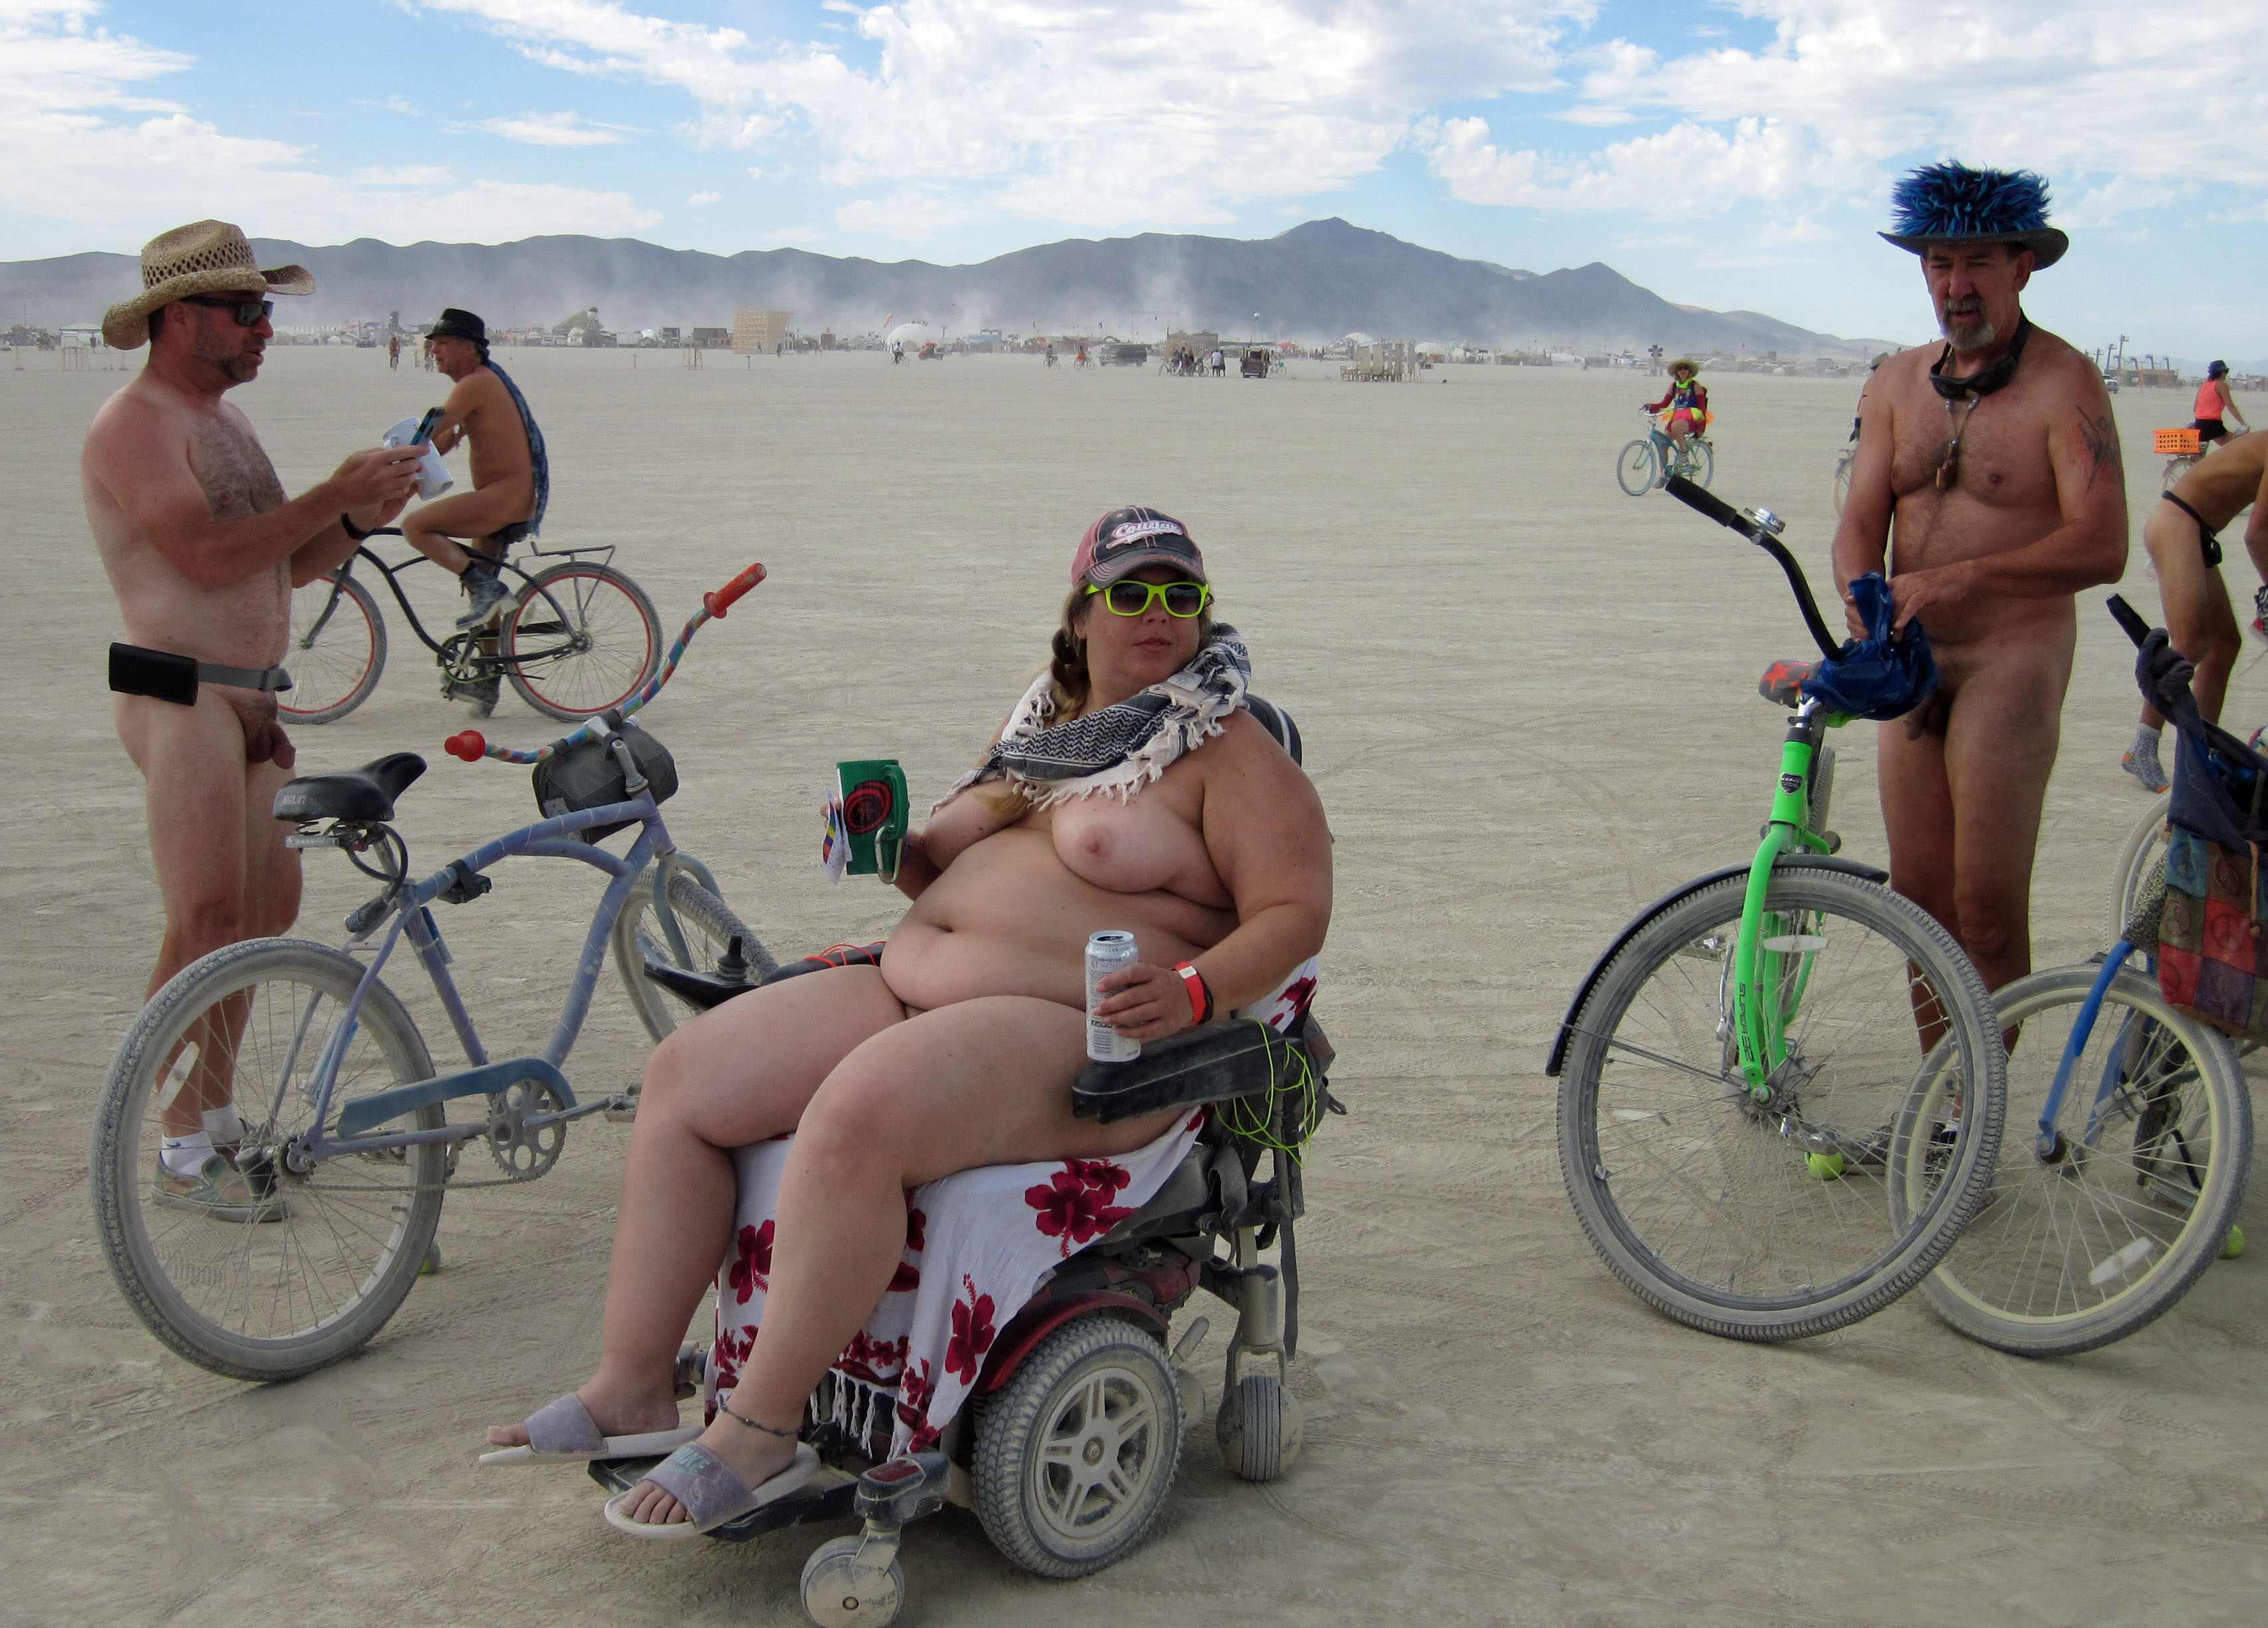 File:Nude woman at Burning man 2009 3.jpg - Wikipedia